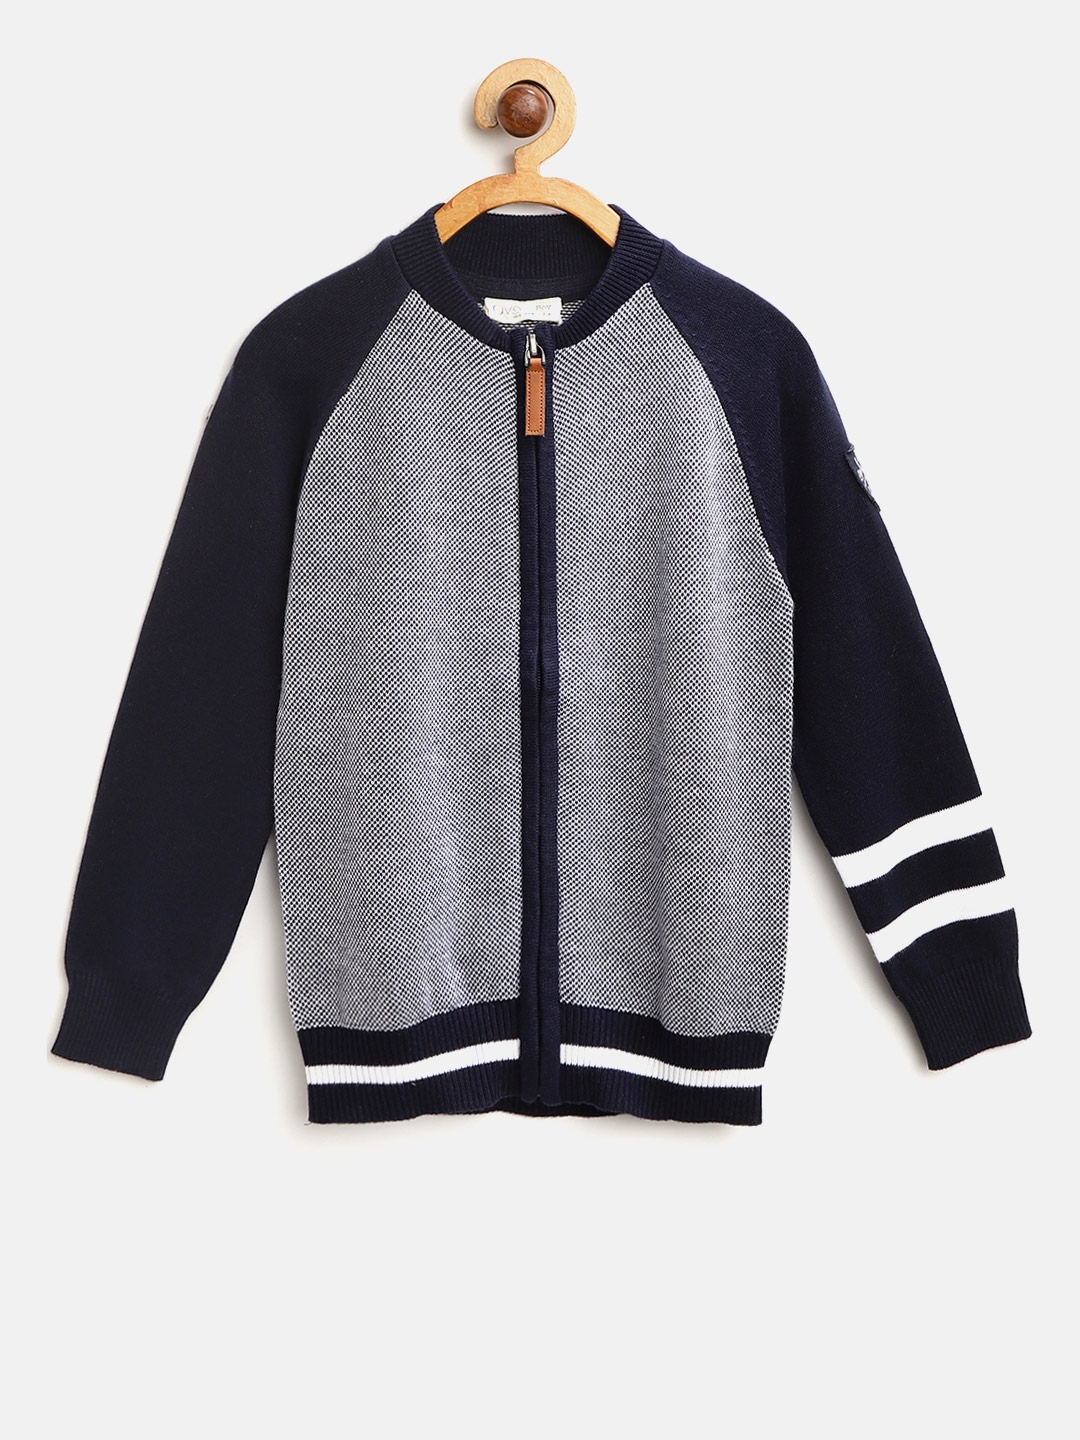 Buy OVS Boys Navy Blue Solid Cardigan - Sweaters for Boys 10759554 | Myntra